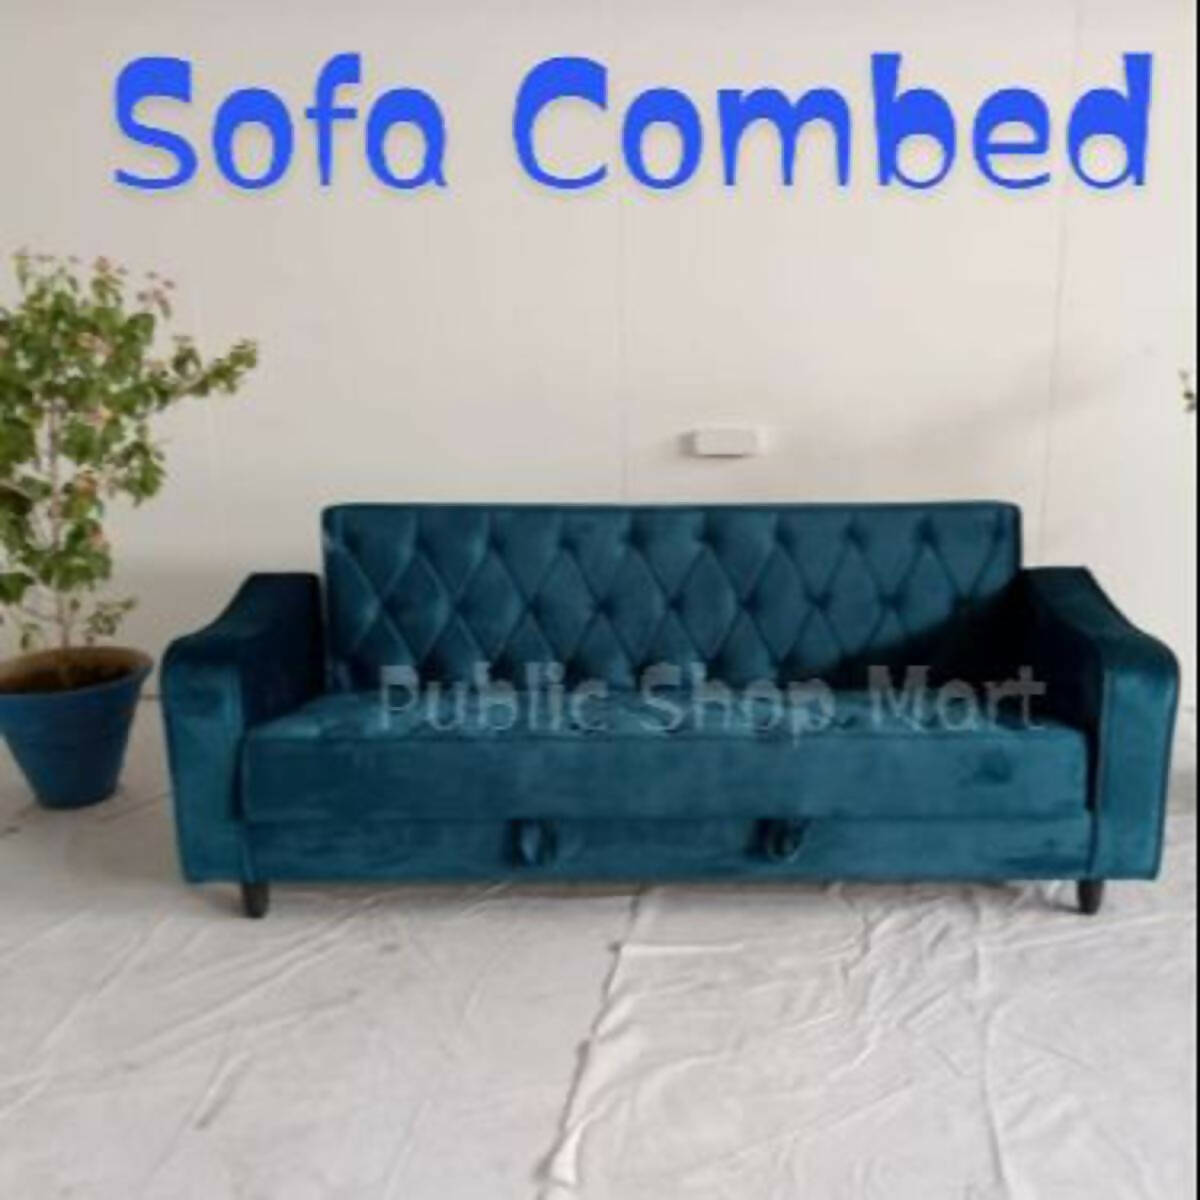 Sofa Combed Cgreen 3 Seater Stylish Tafteen Design Colour